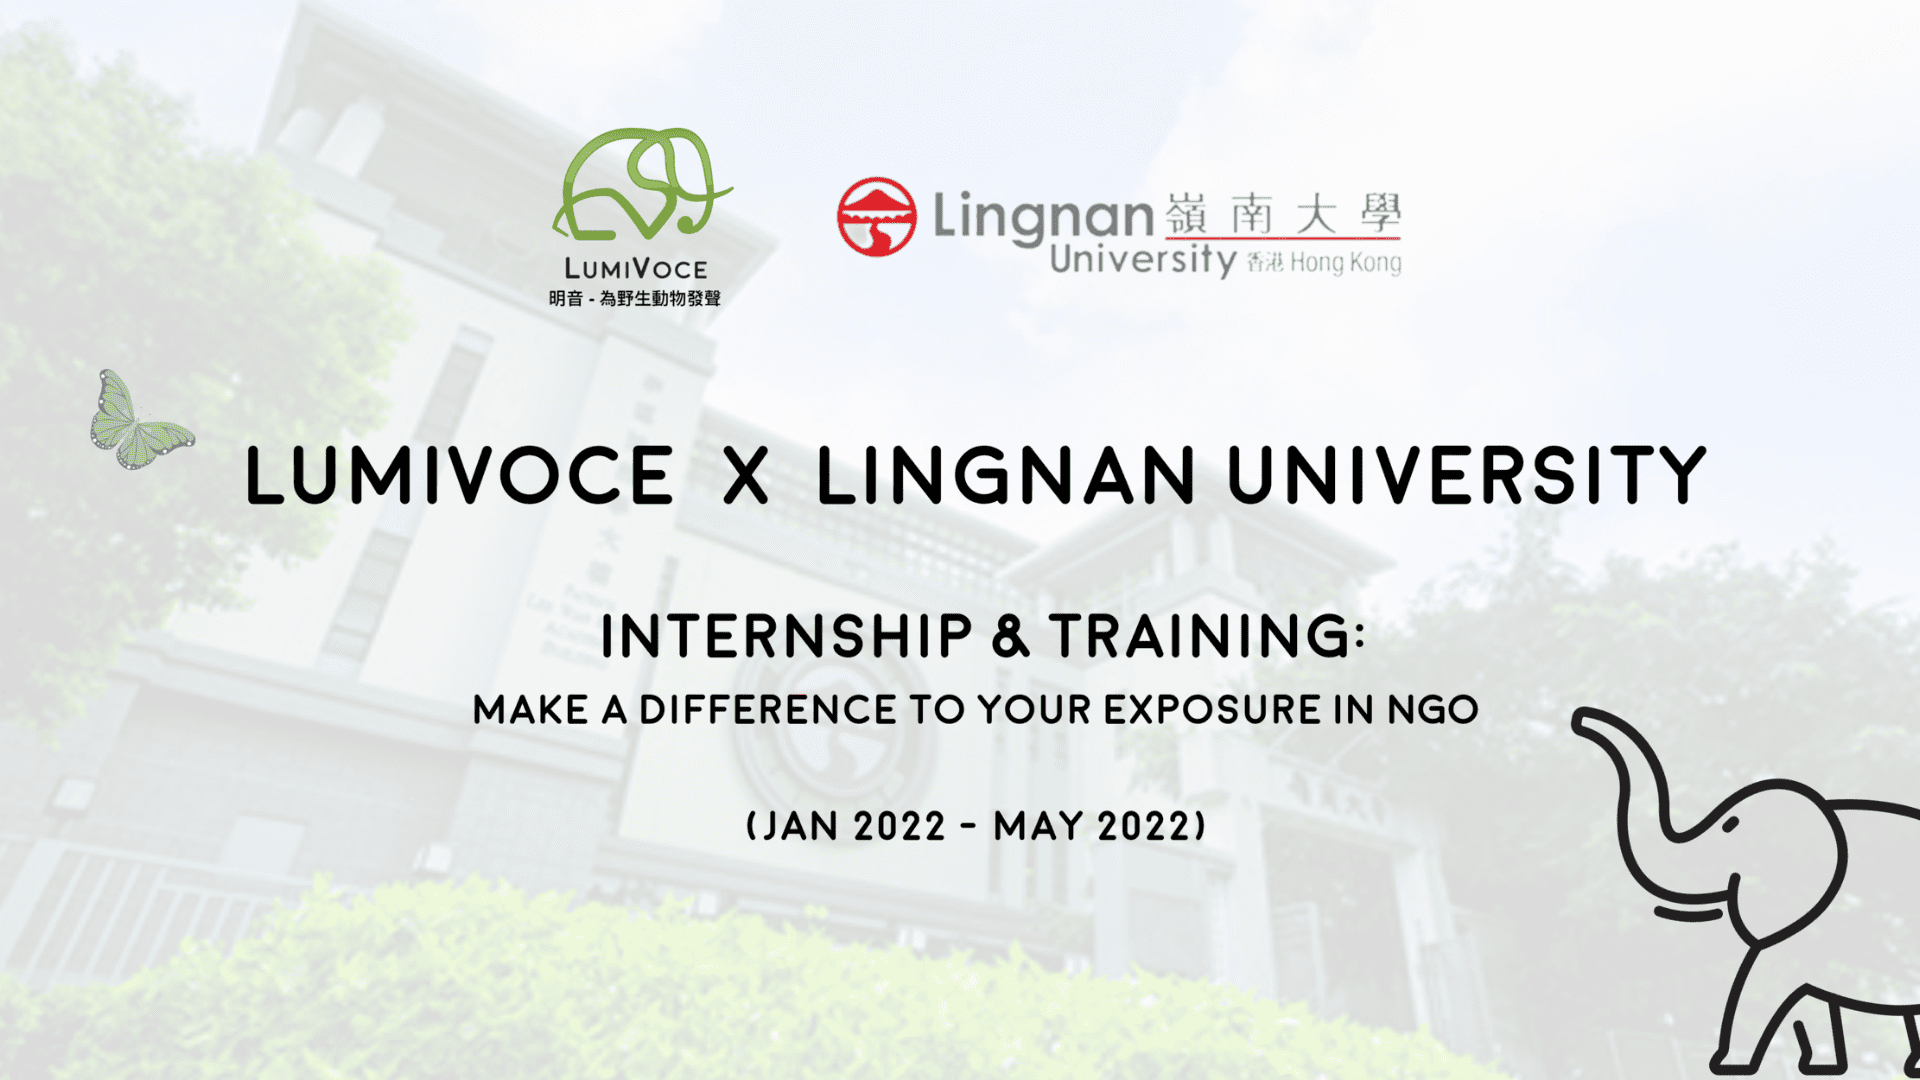 Lingnan University x LumiVoce Internship & Training Program Announcement